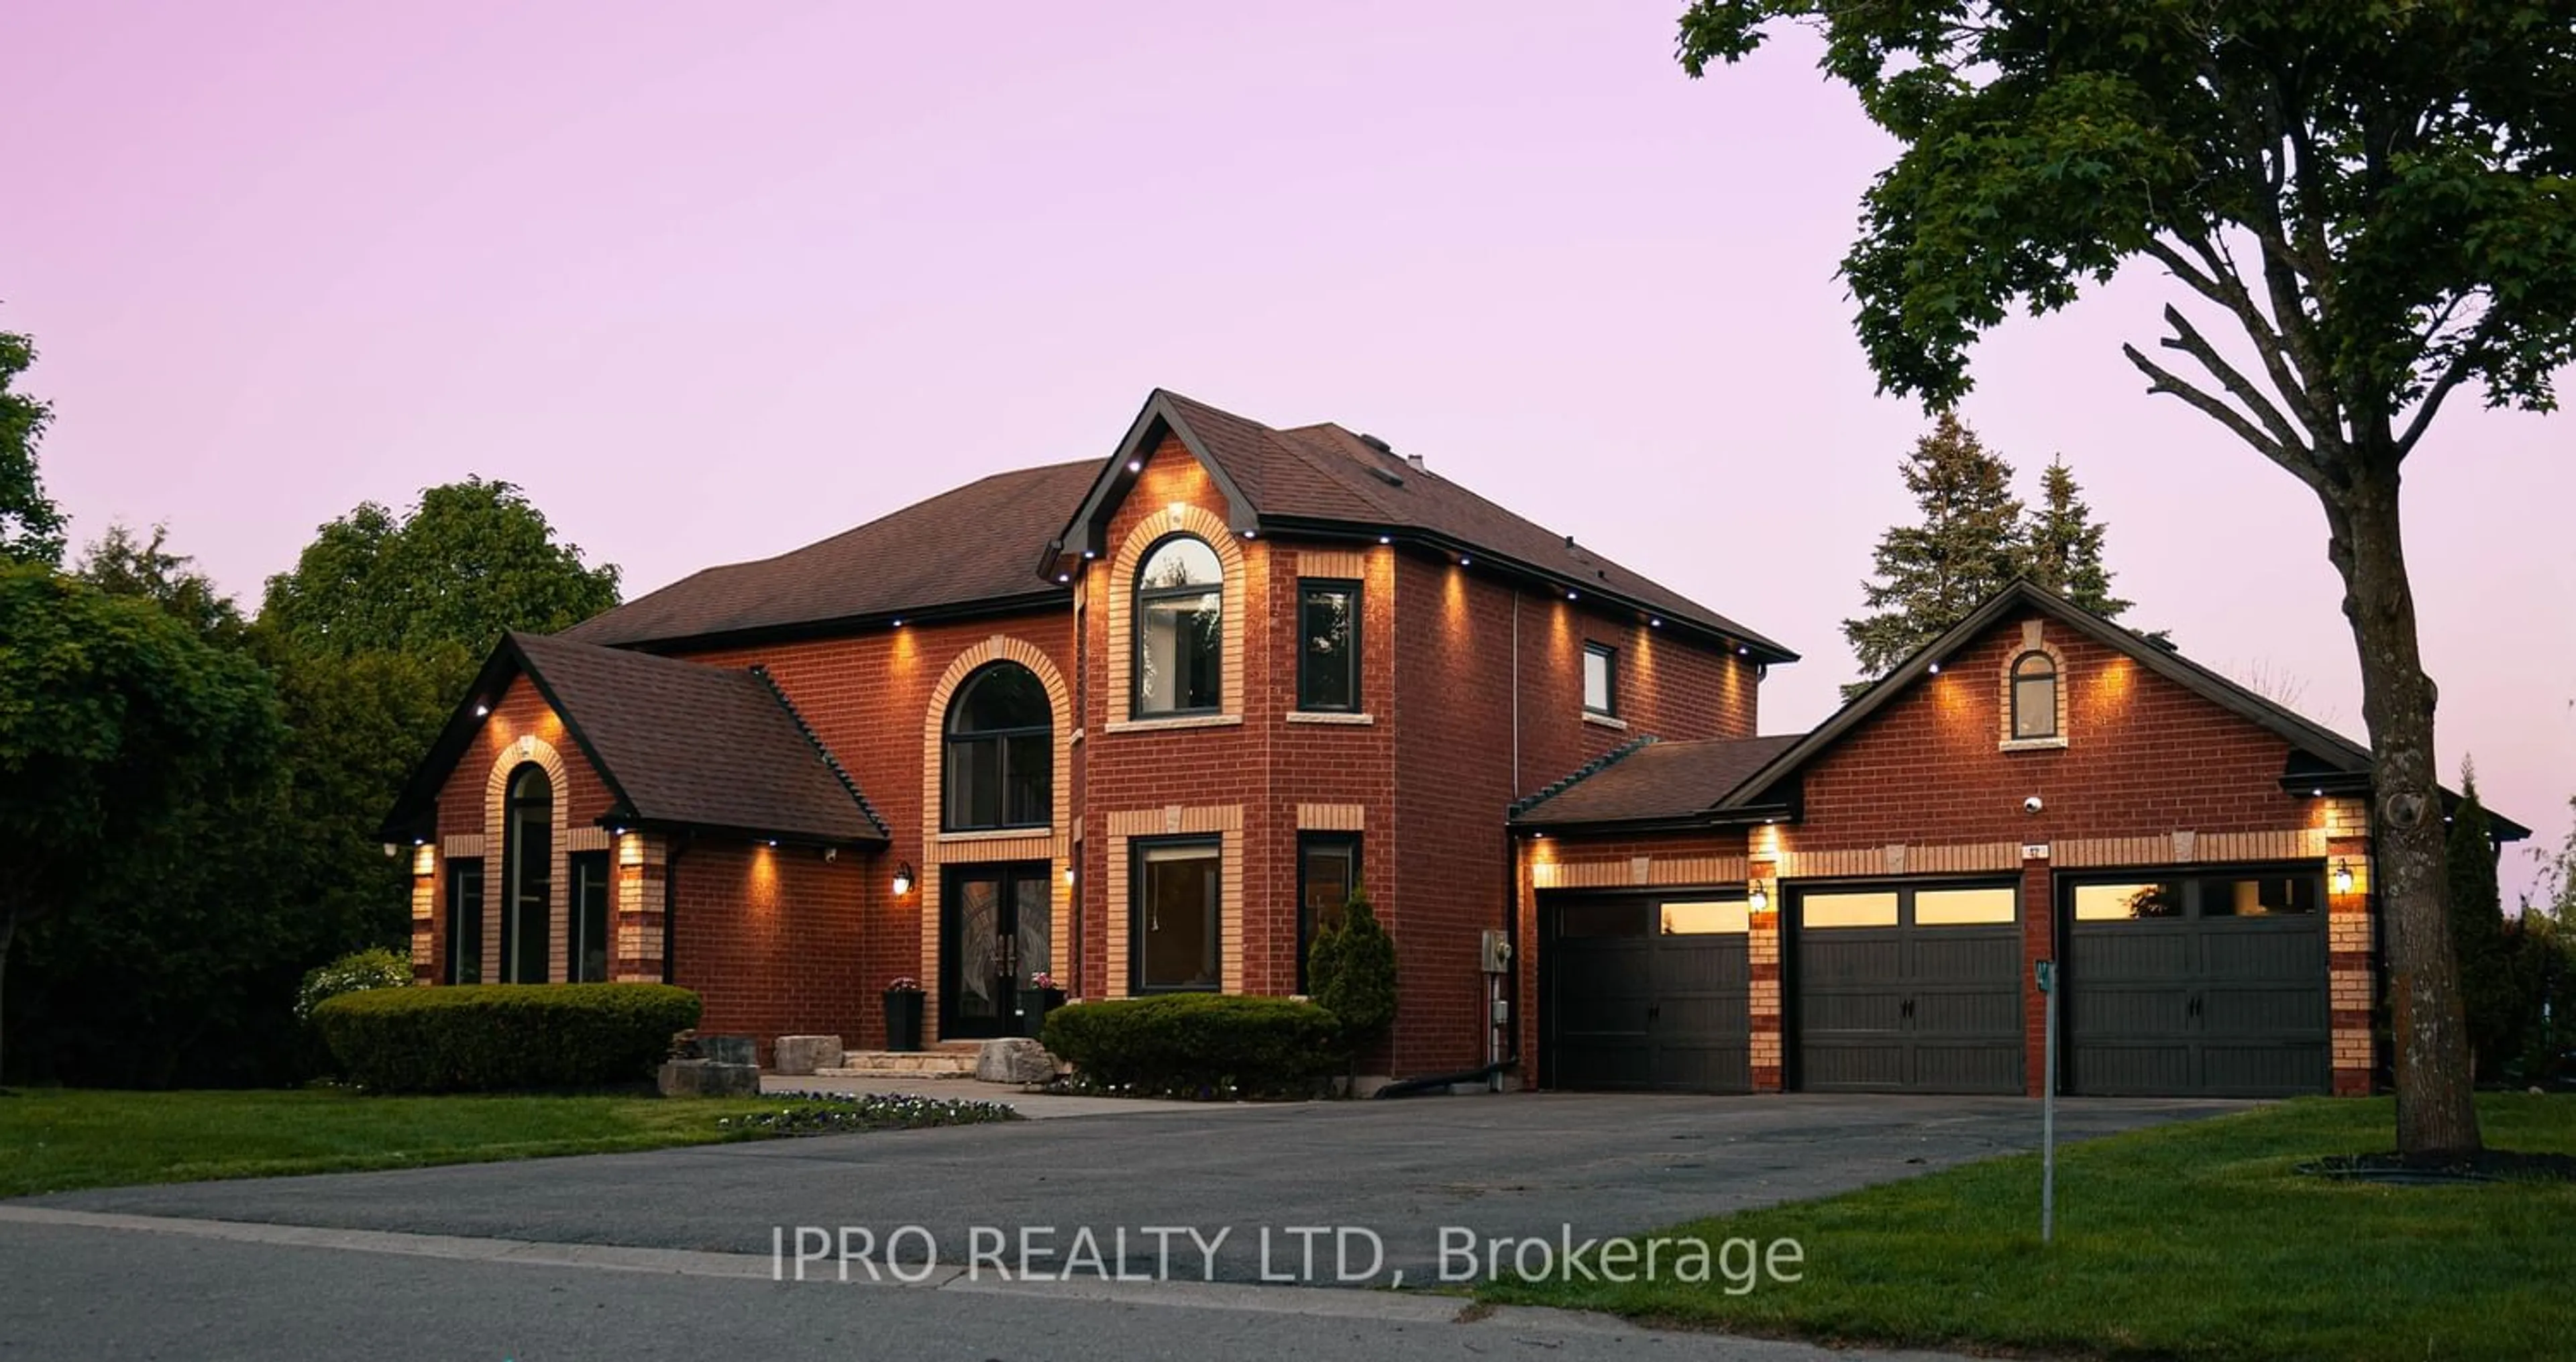 Home with brick exterior material for 42 Mccauley Dr, Caledon Ontario L7E 0B3